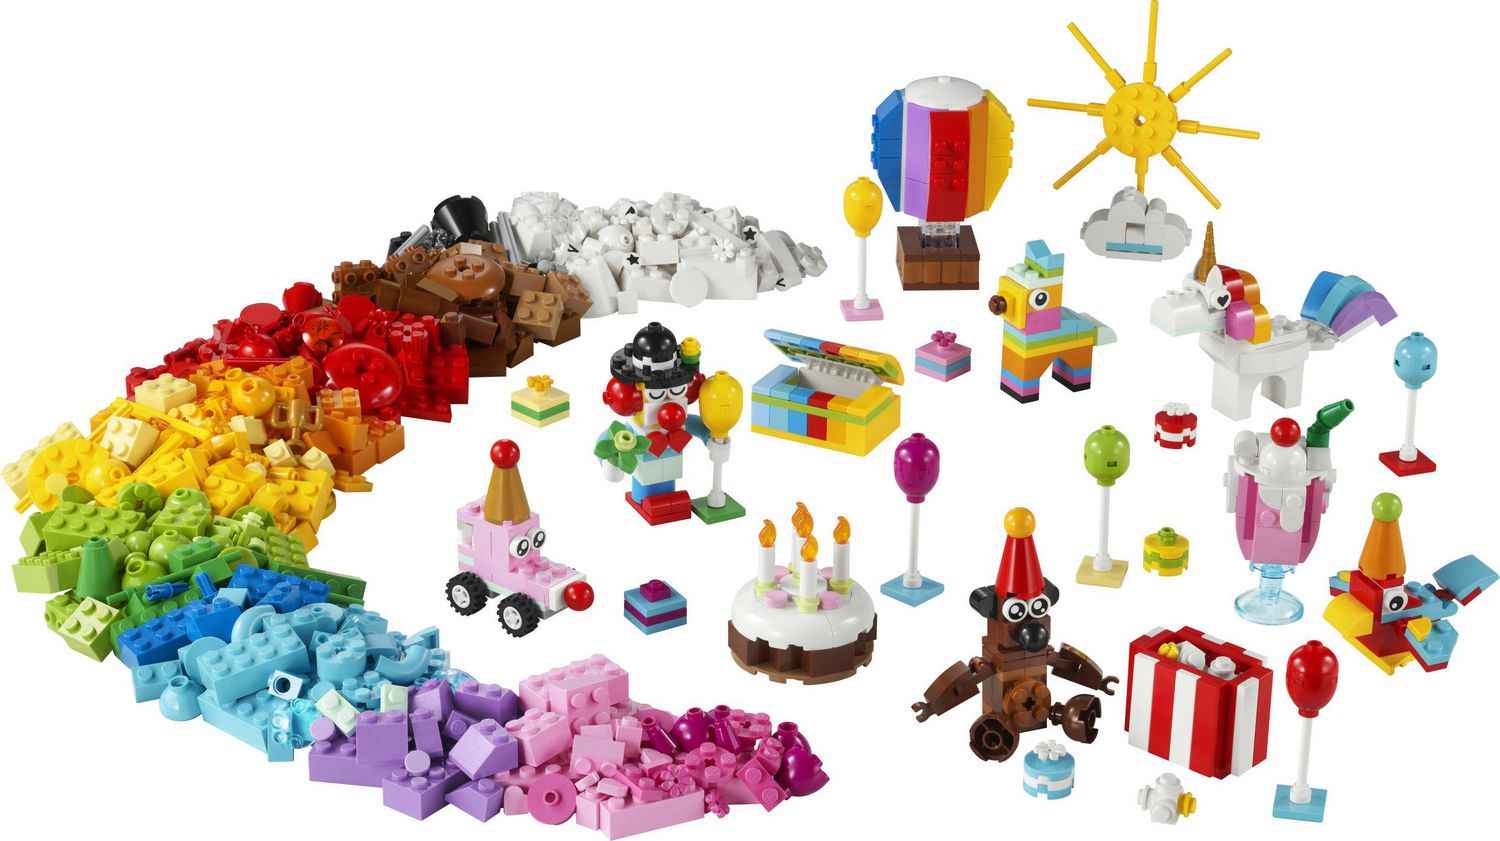 LEGO Classic Creative Party Box Bricks Set 11029, Family Games to